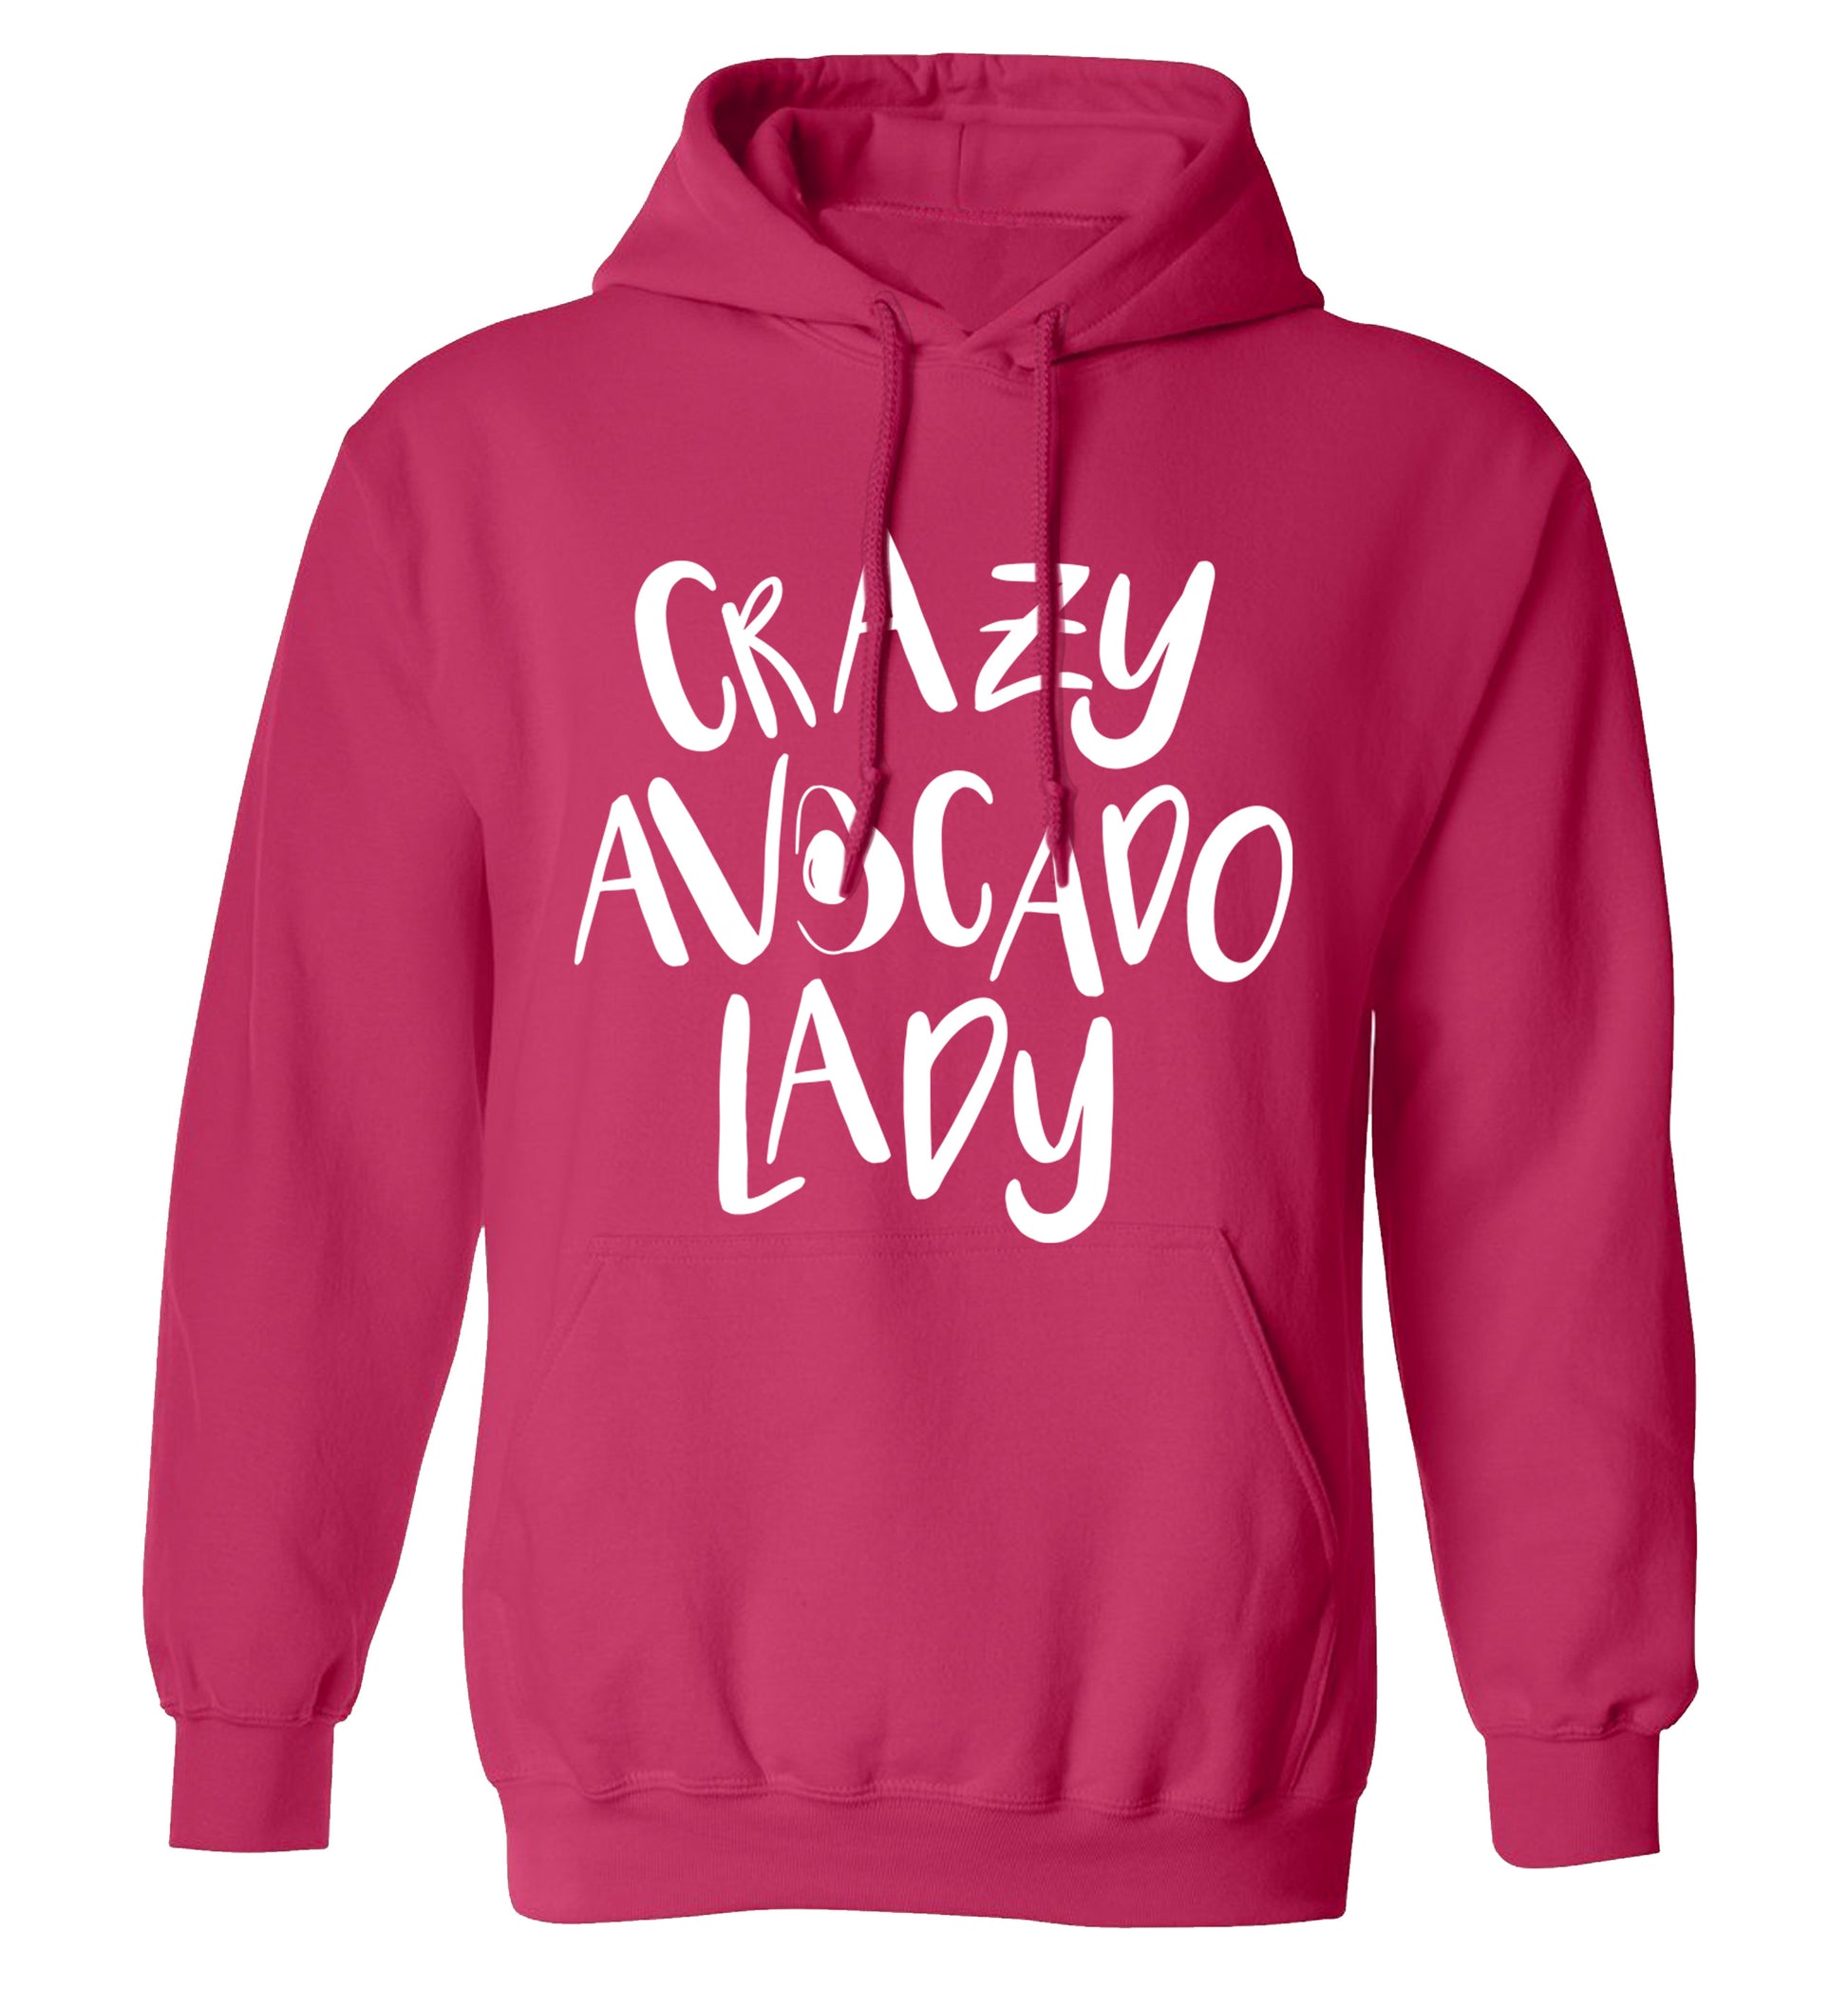 Crazy avocado lady adults unisex pink hoodie 2XL